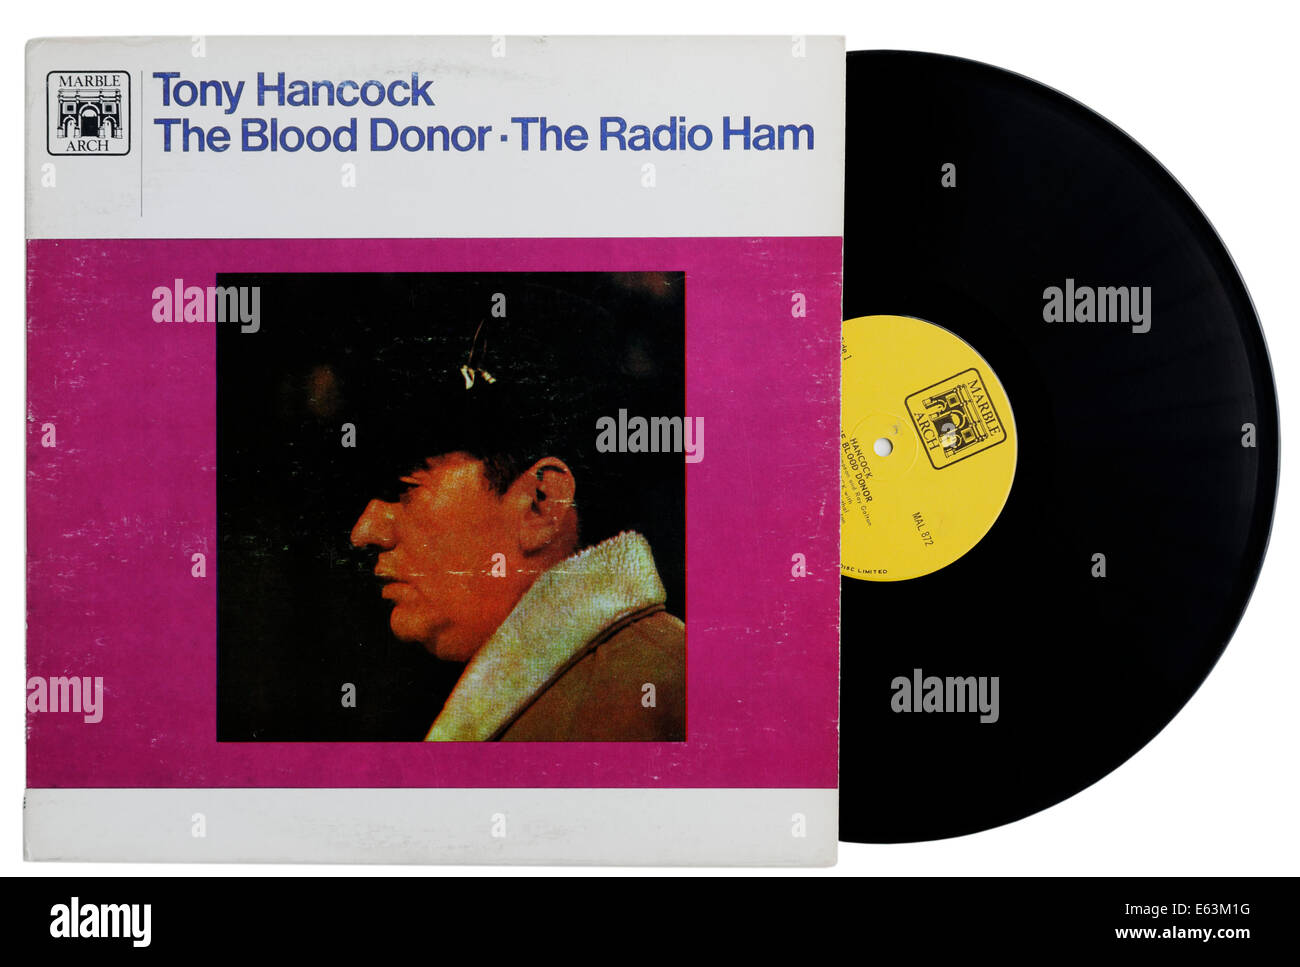 The Blood Donor and The Radio Ham by Tony Hancock on vinyl Stock Photo